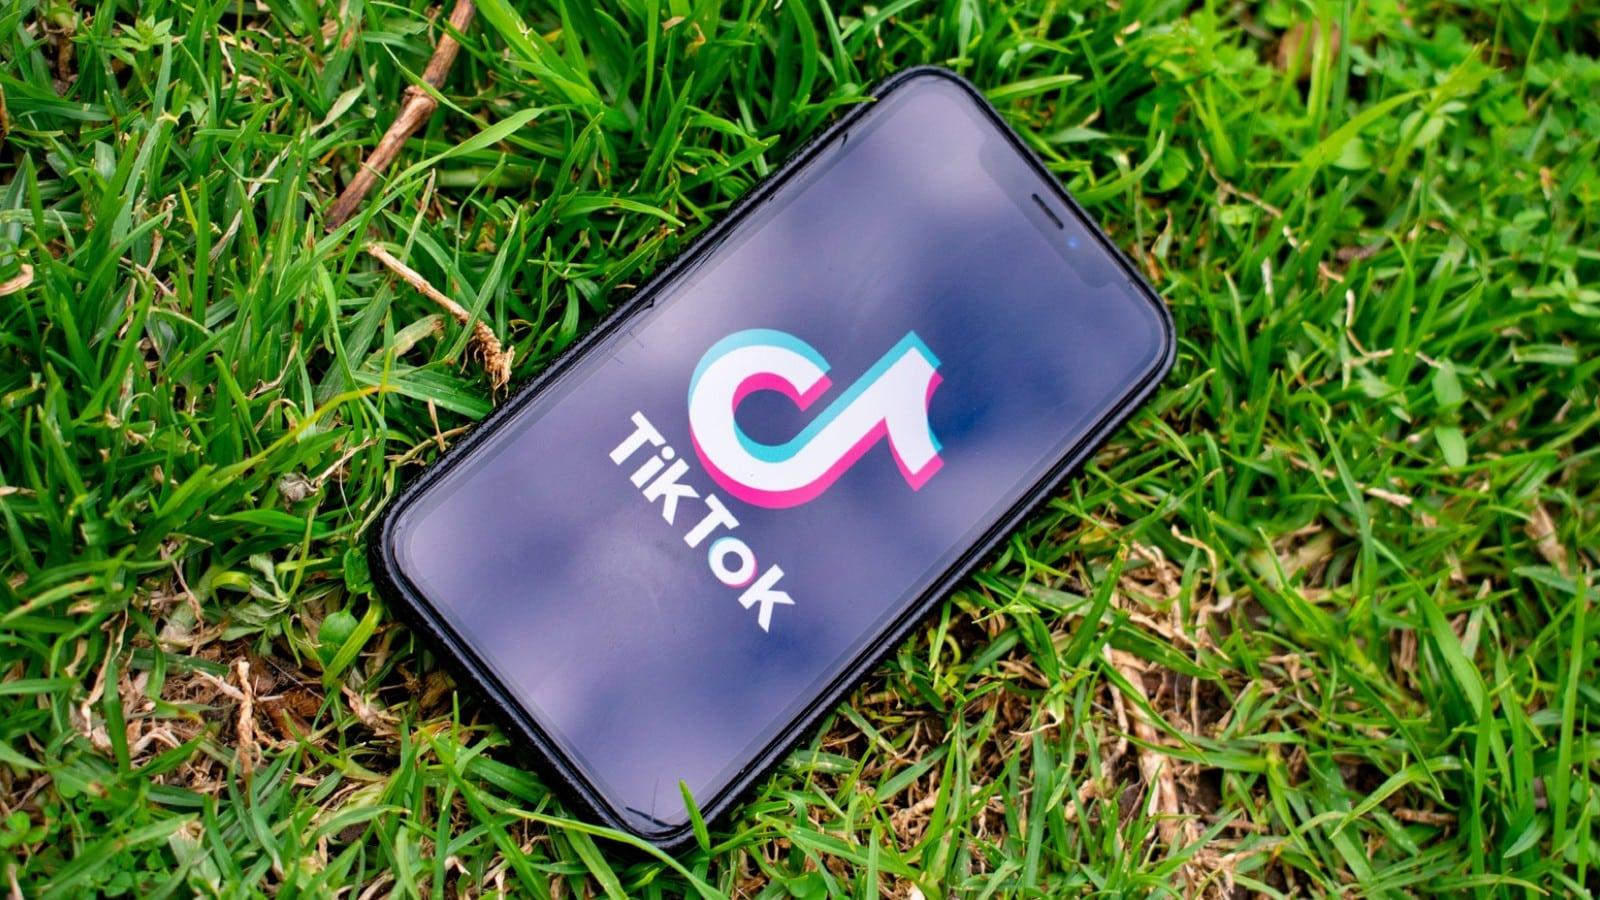 TikTok loading screen on phone in grass